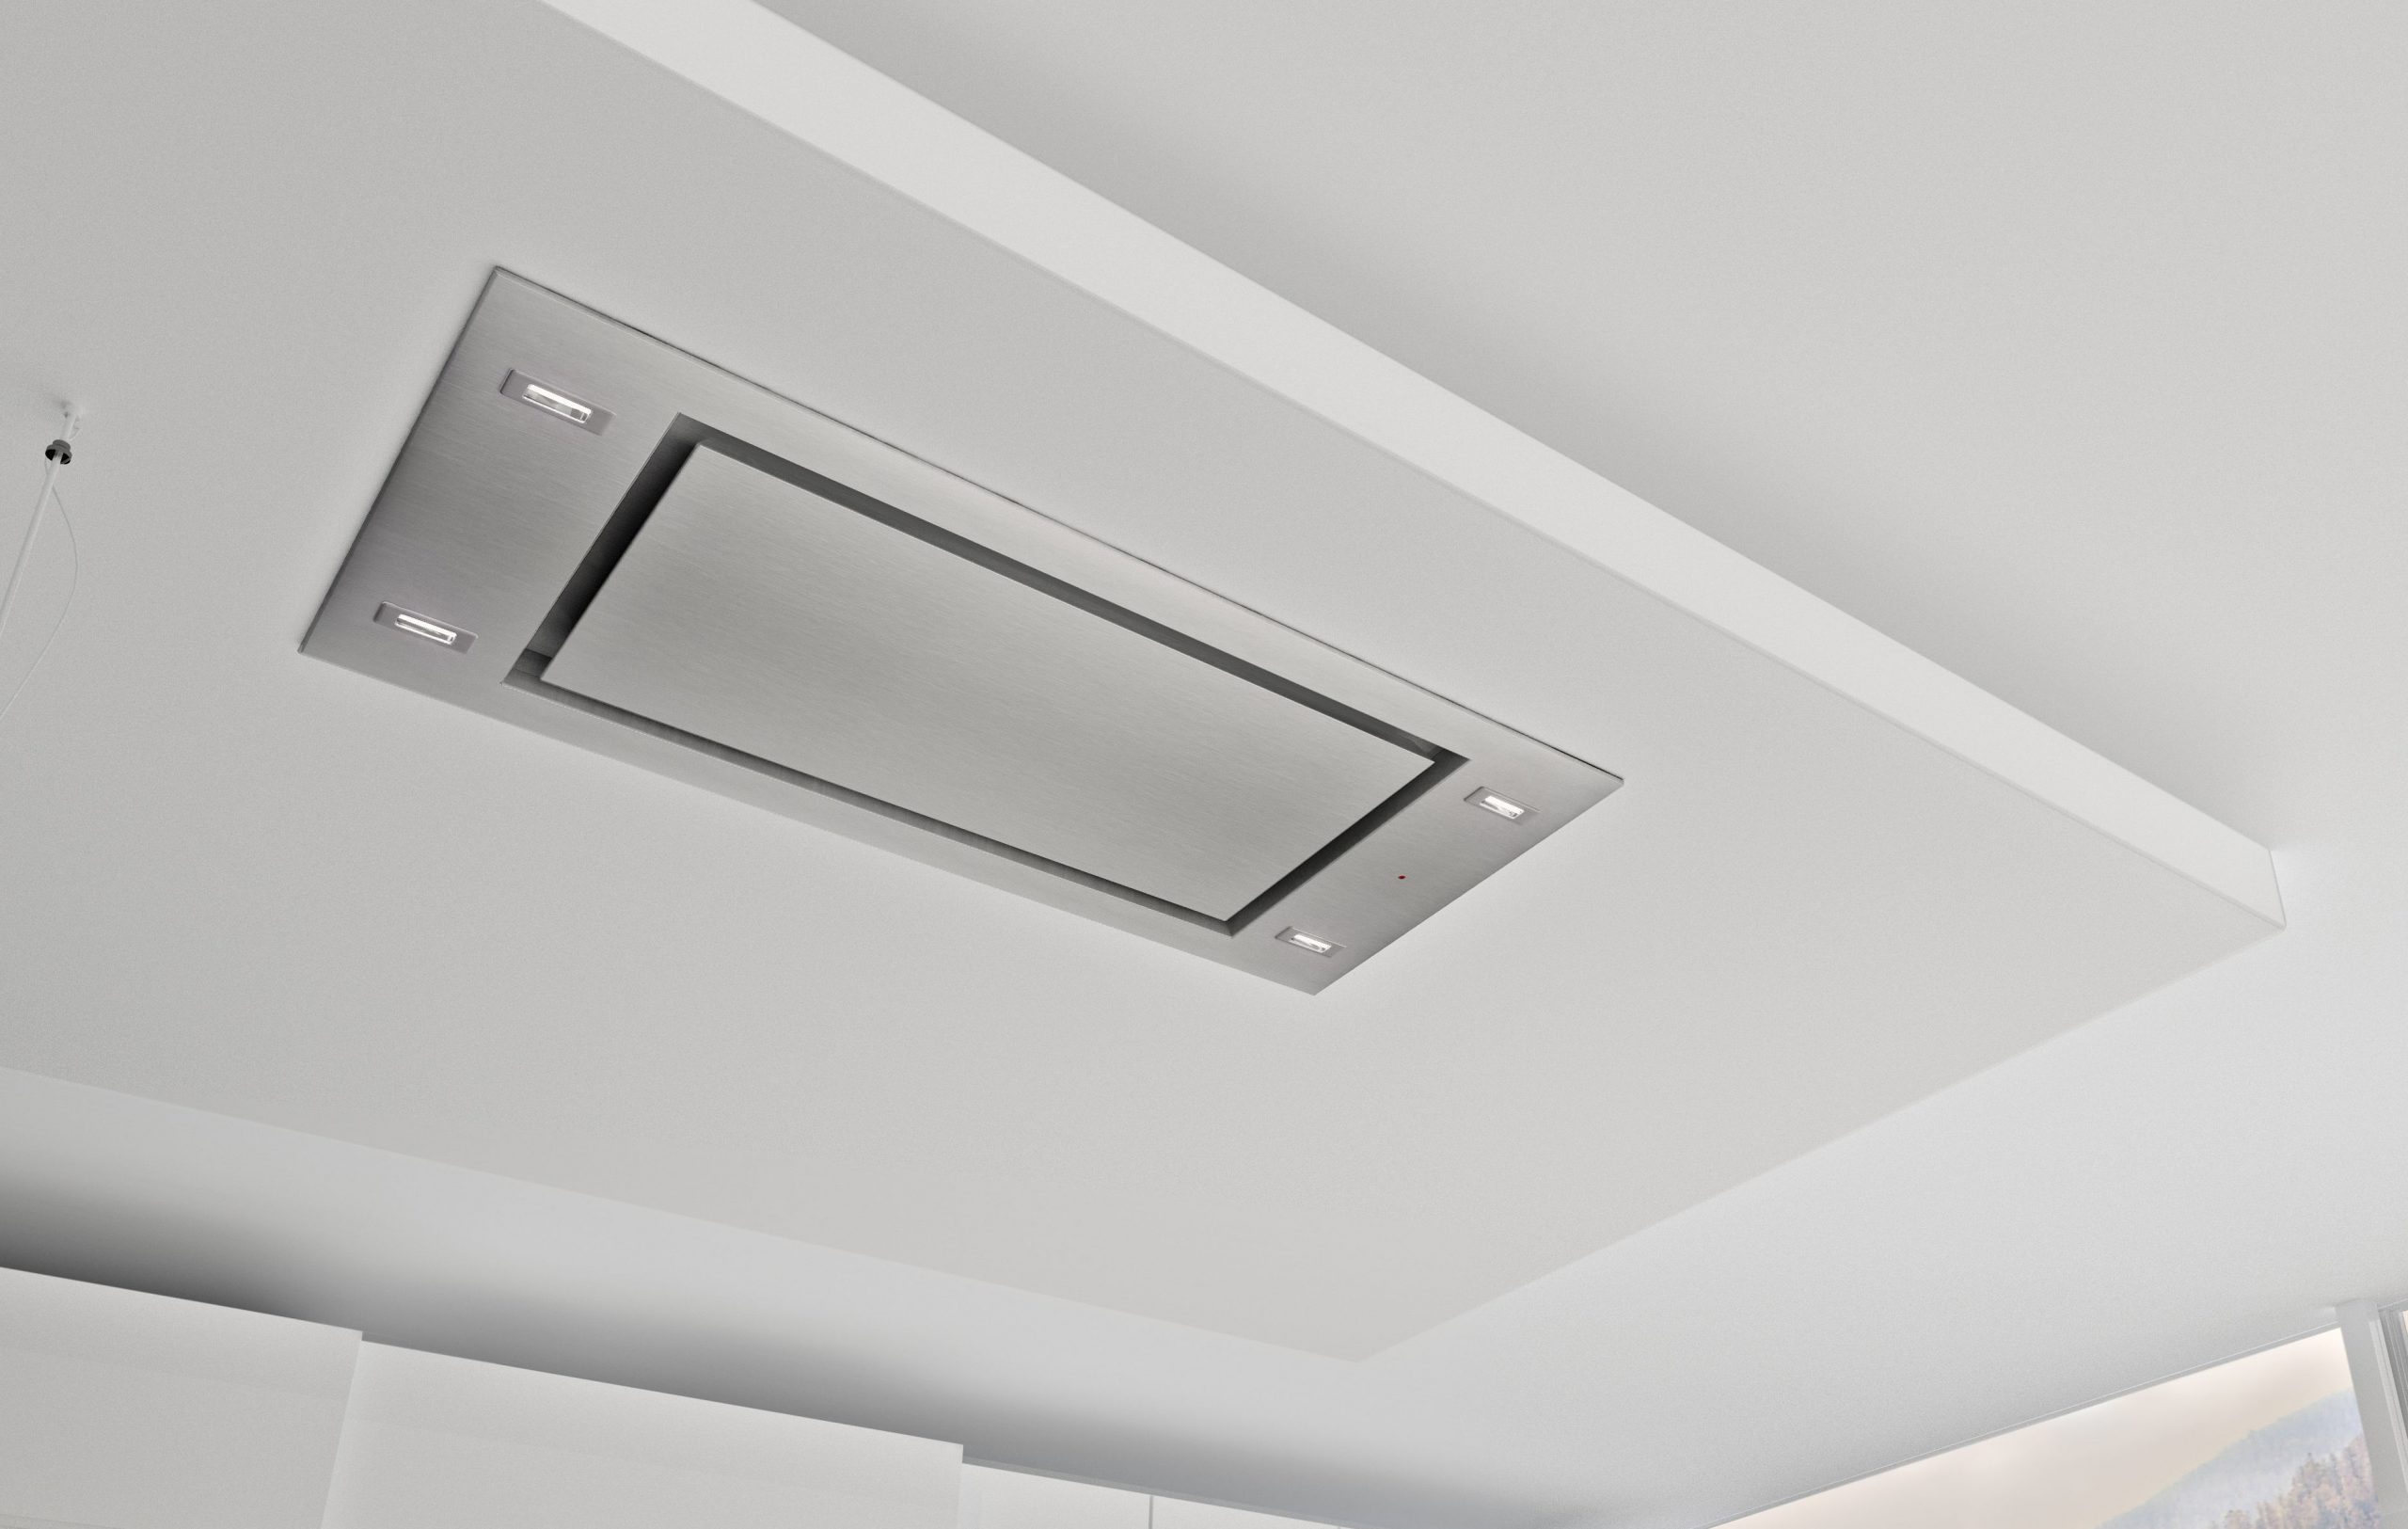 Rangehood Built Into Ceiling Bathroom Ventilation Fan pertaining to dimensions 3737 X 2372